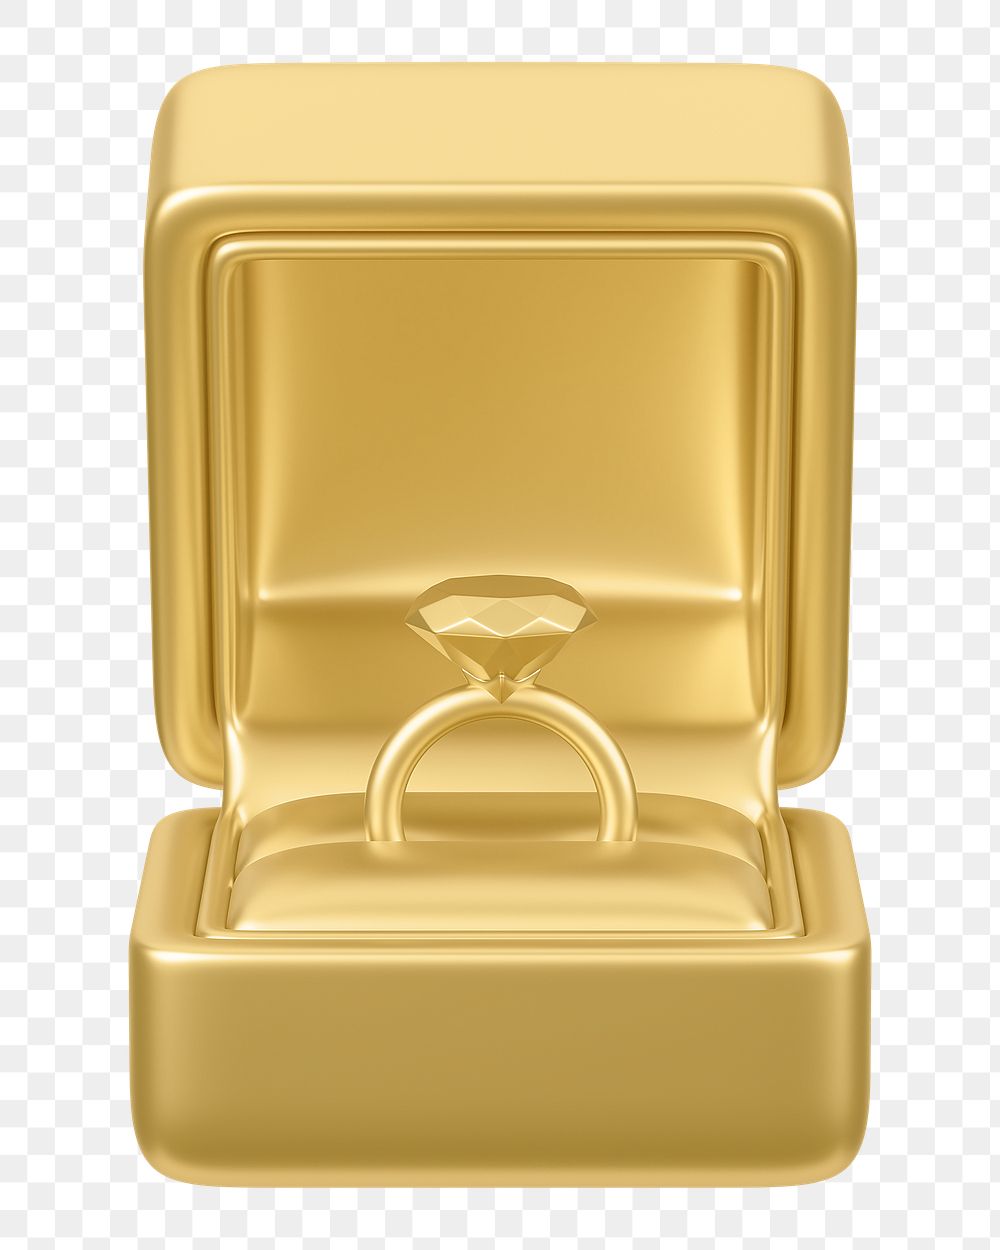 Gold  engagement ring box png 3D illustration, transparent background